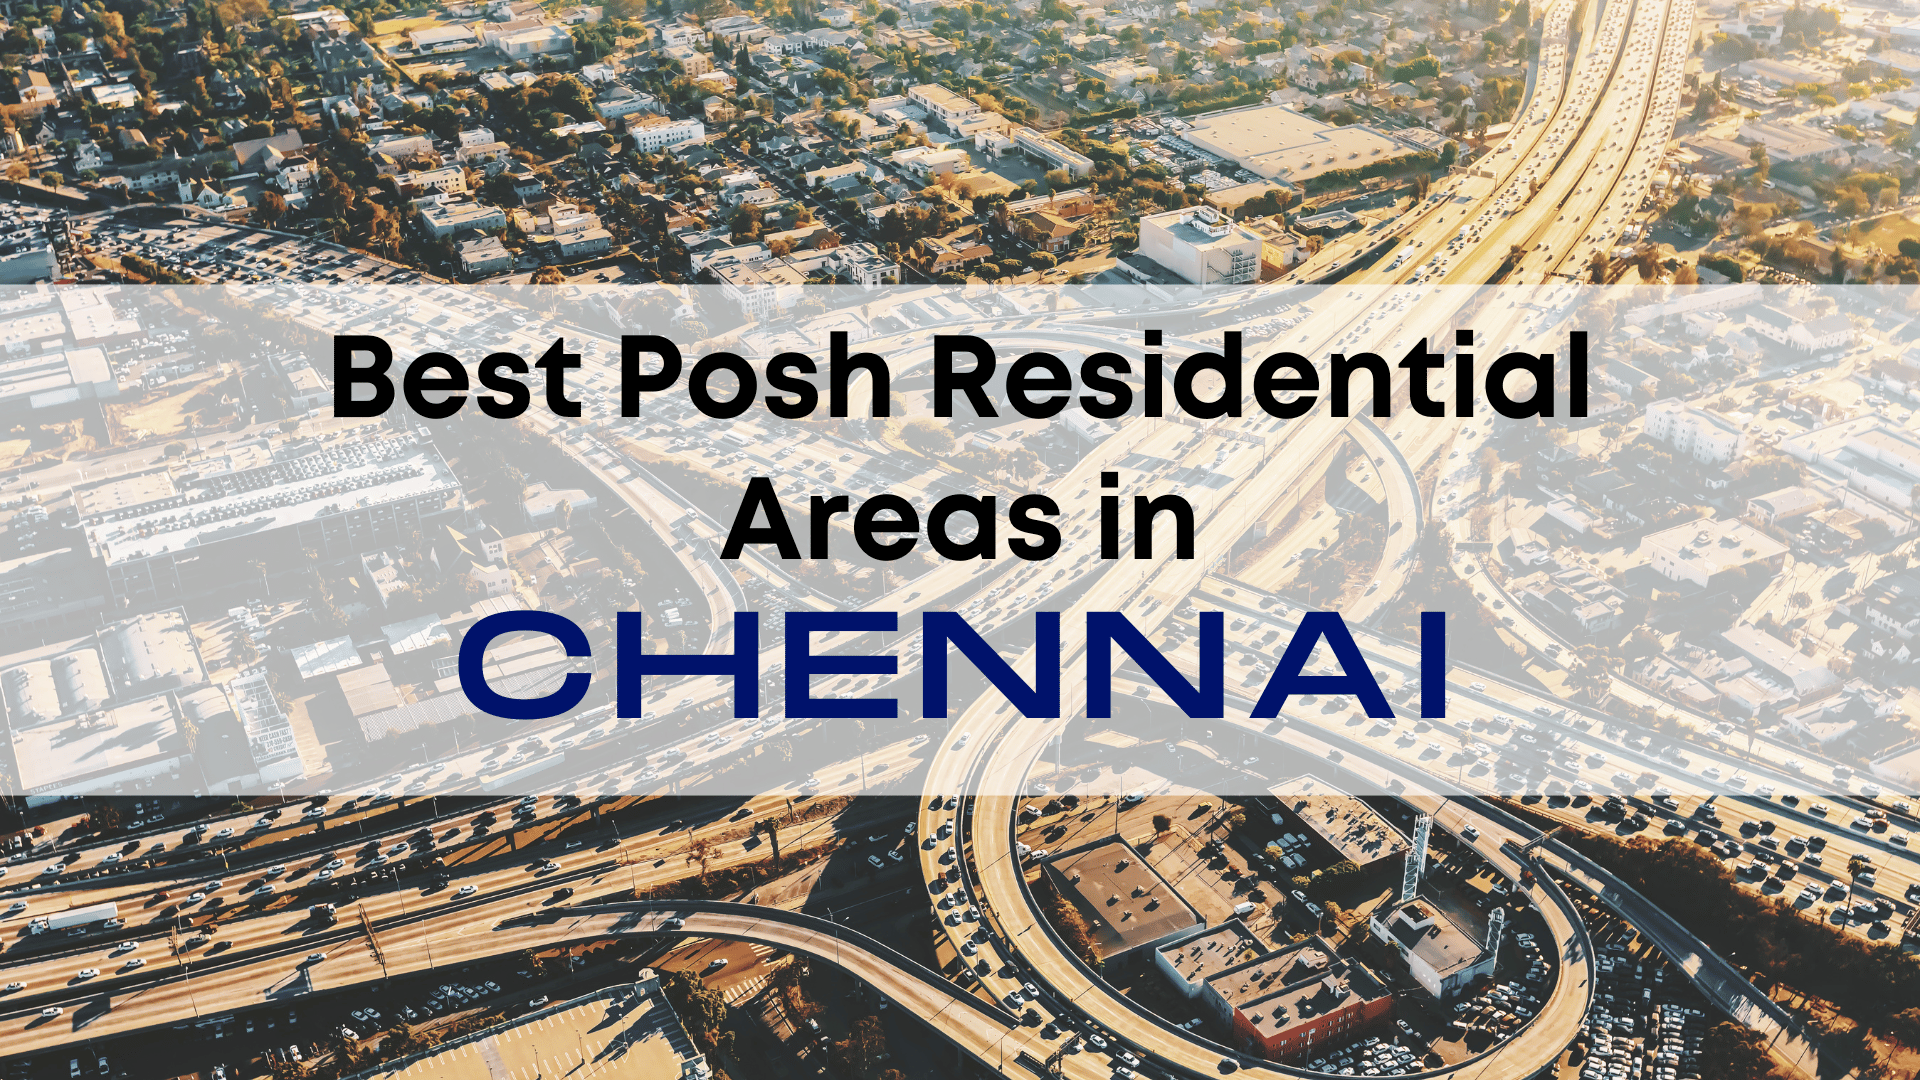 Posh Residential Areas in Chennai